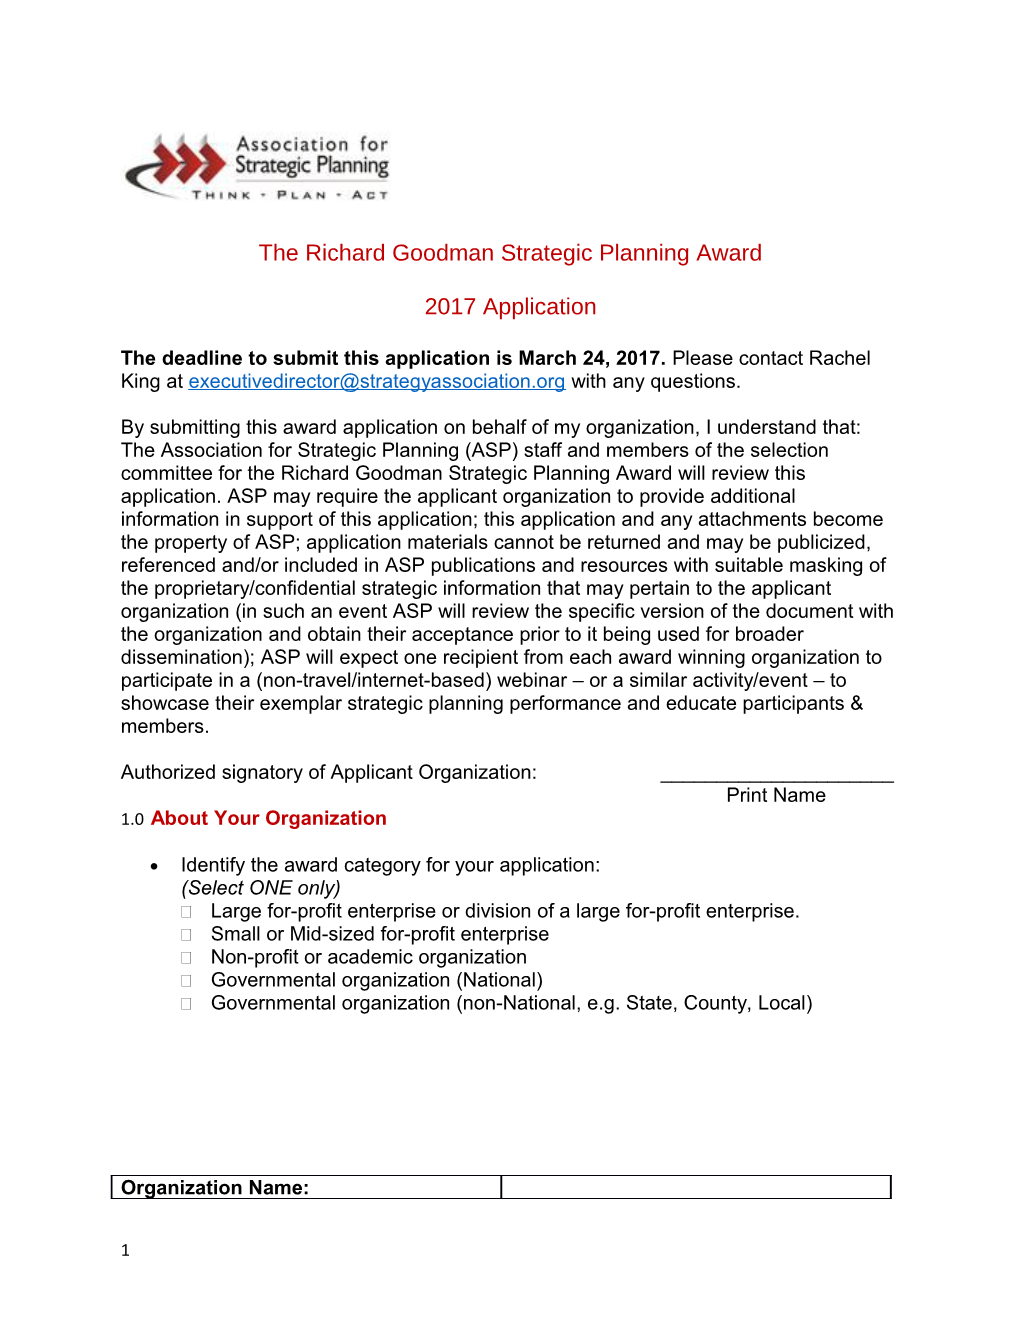 The Richard Goodman Strategic Planning Award